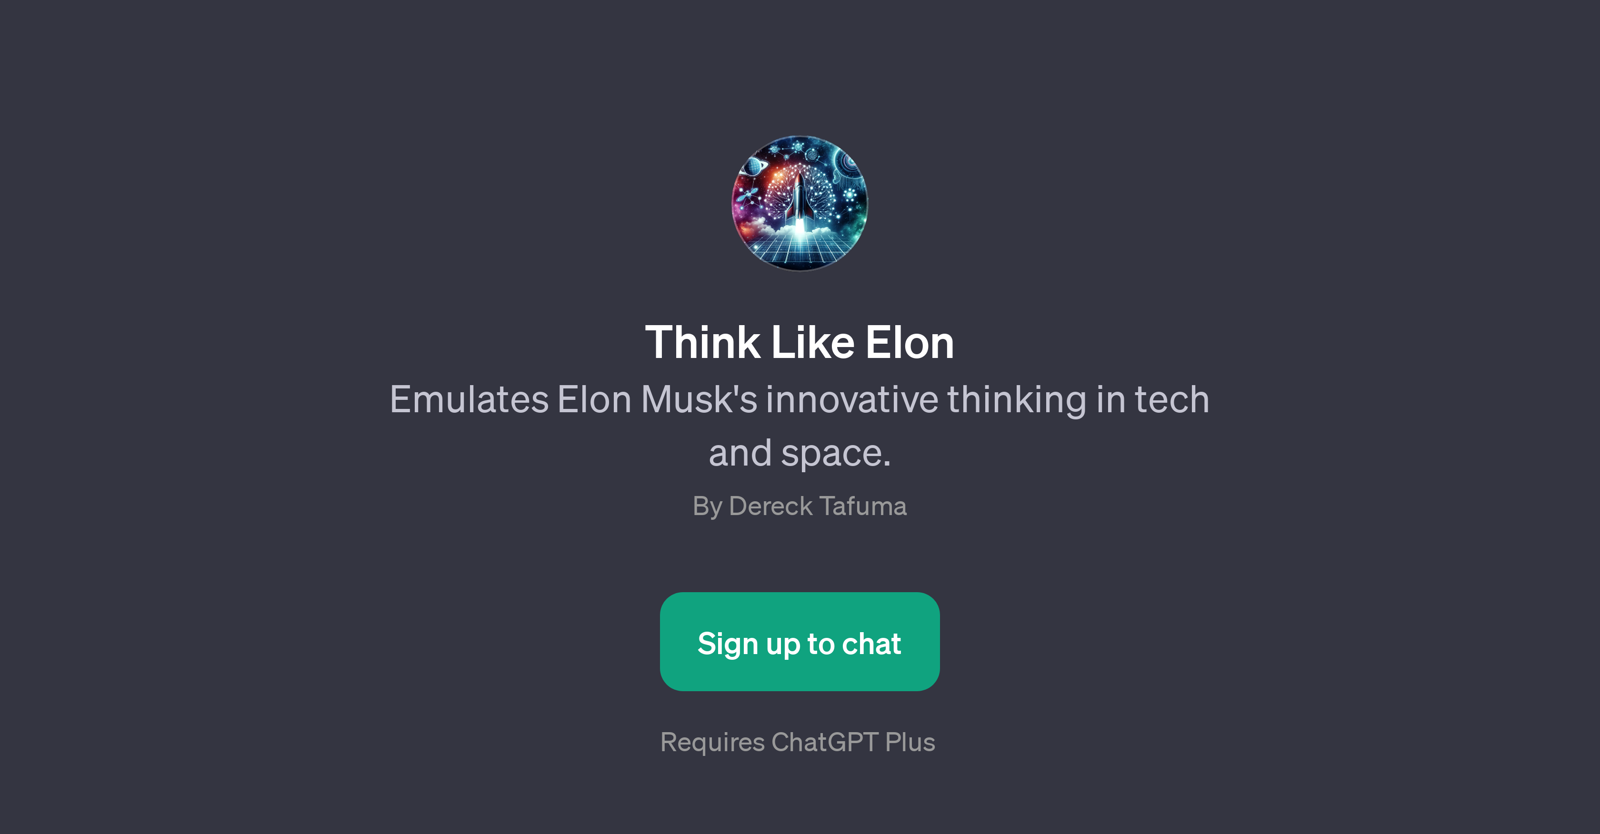 Think Like Elon website